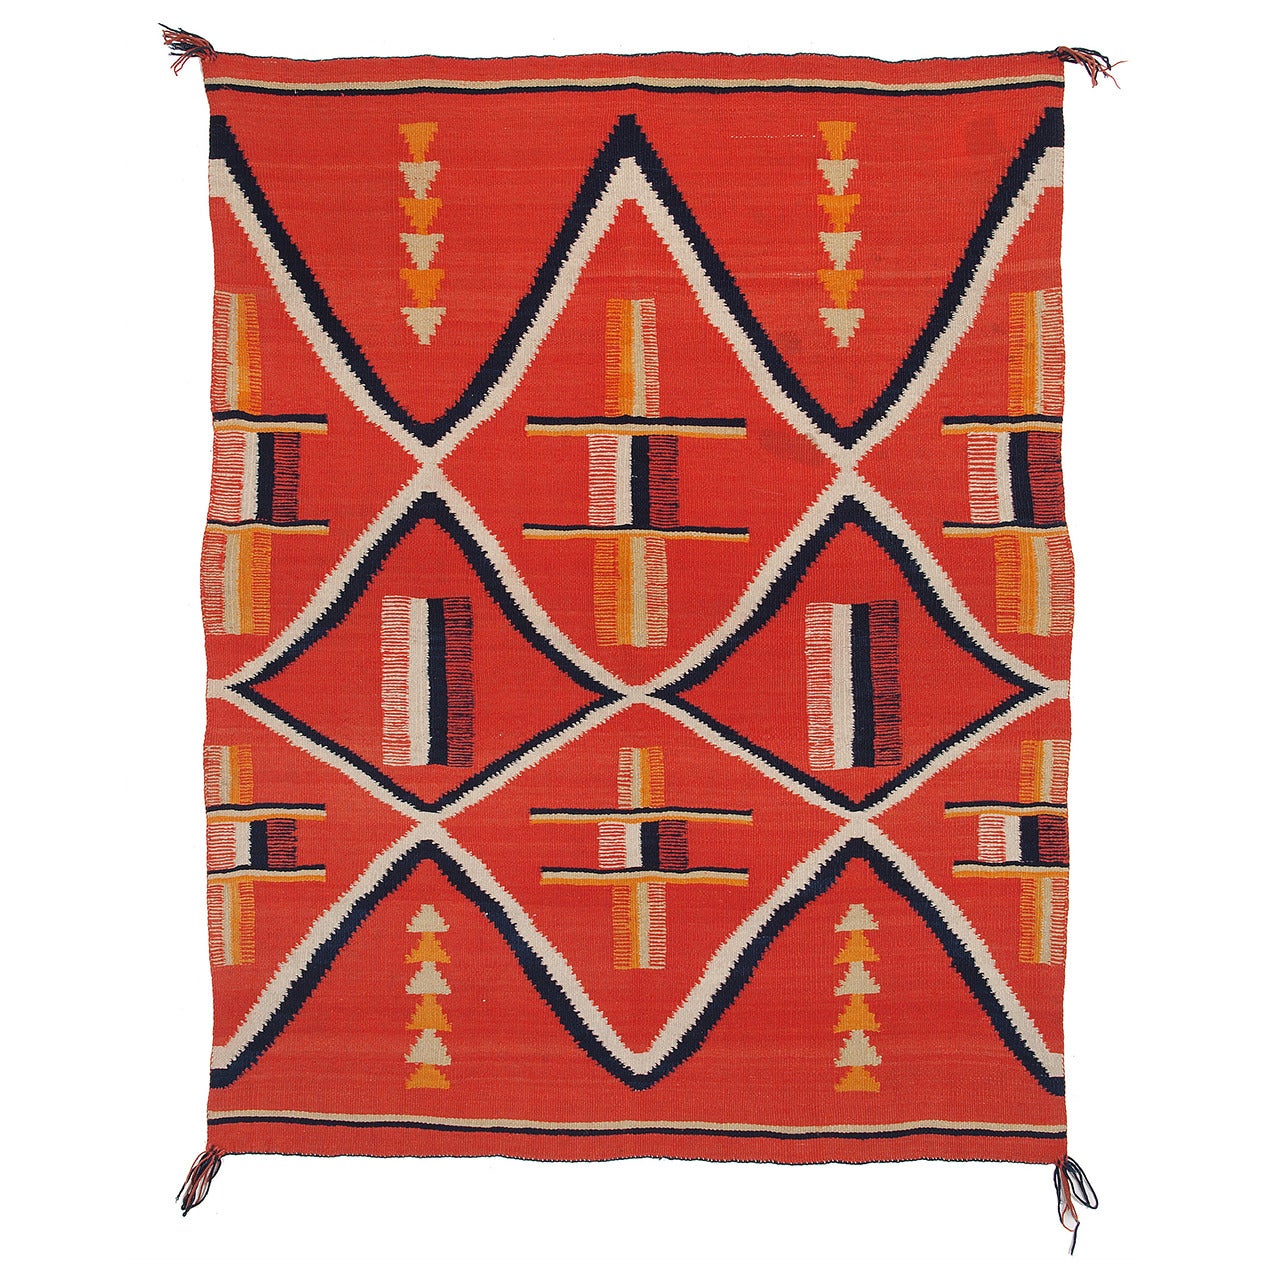 Late Classic Period Navajo Wearing Blanket, circa 1875